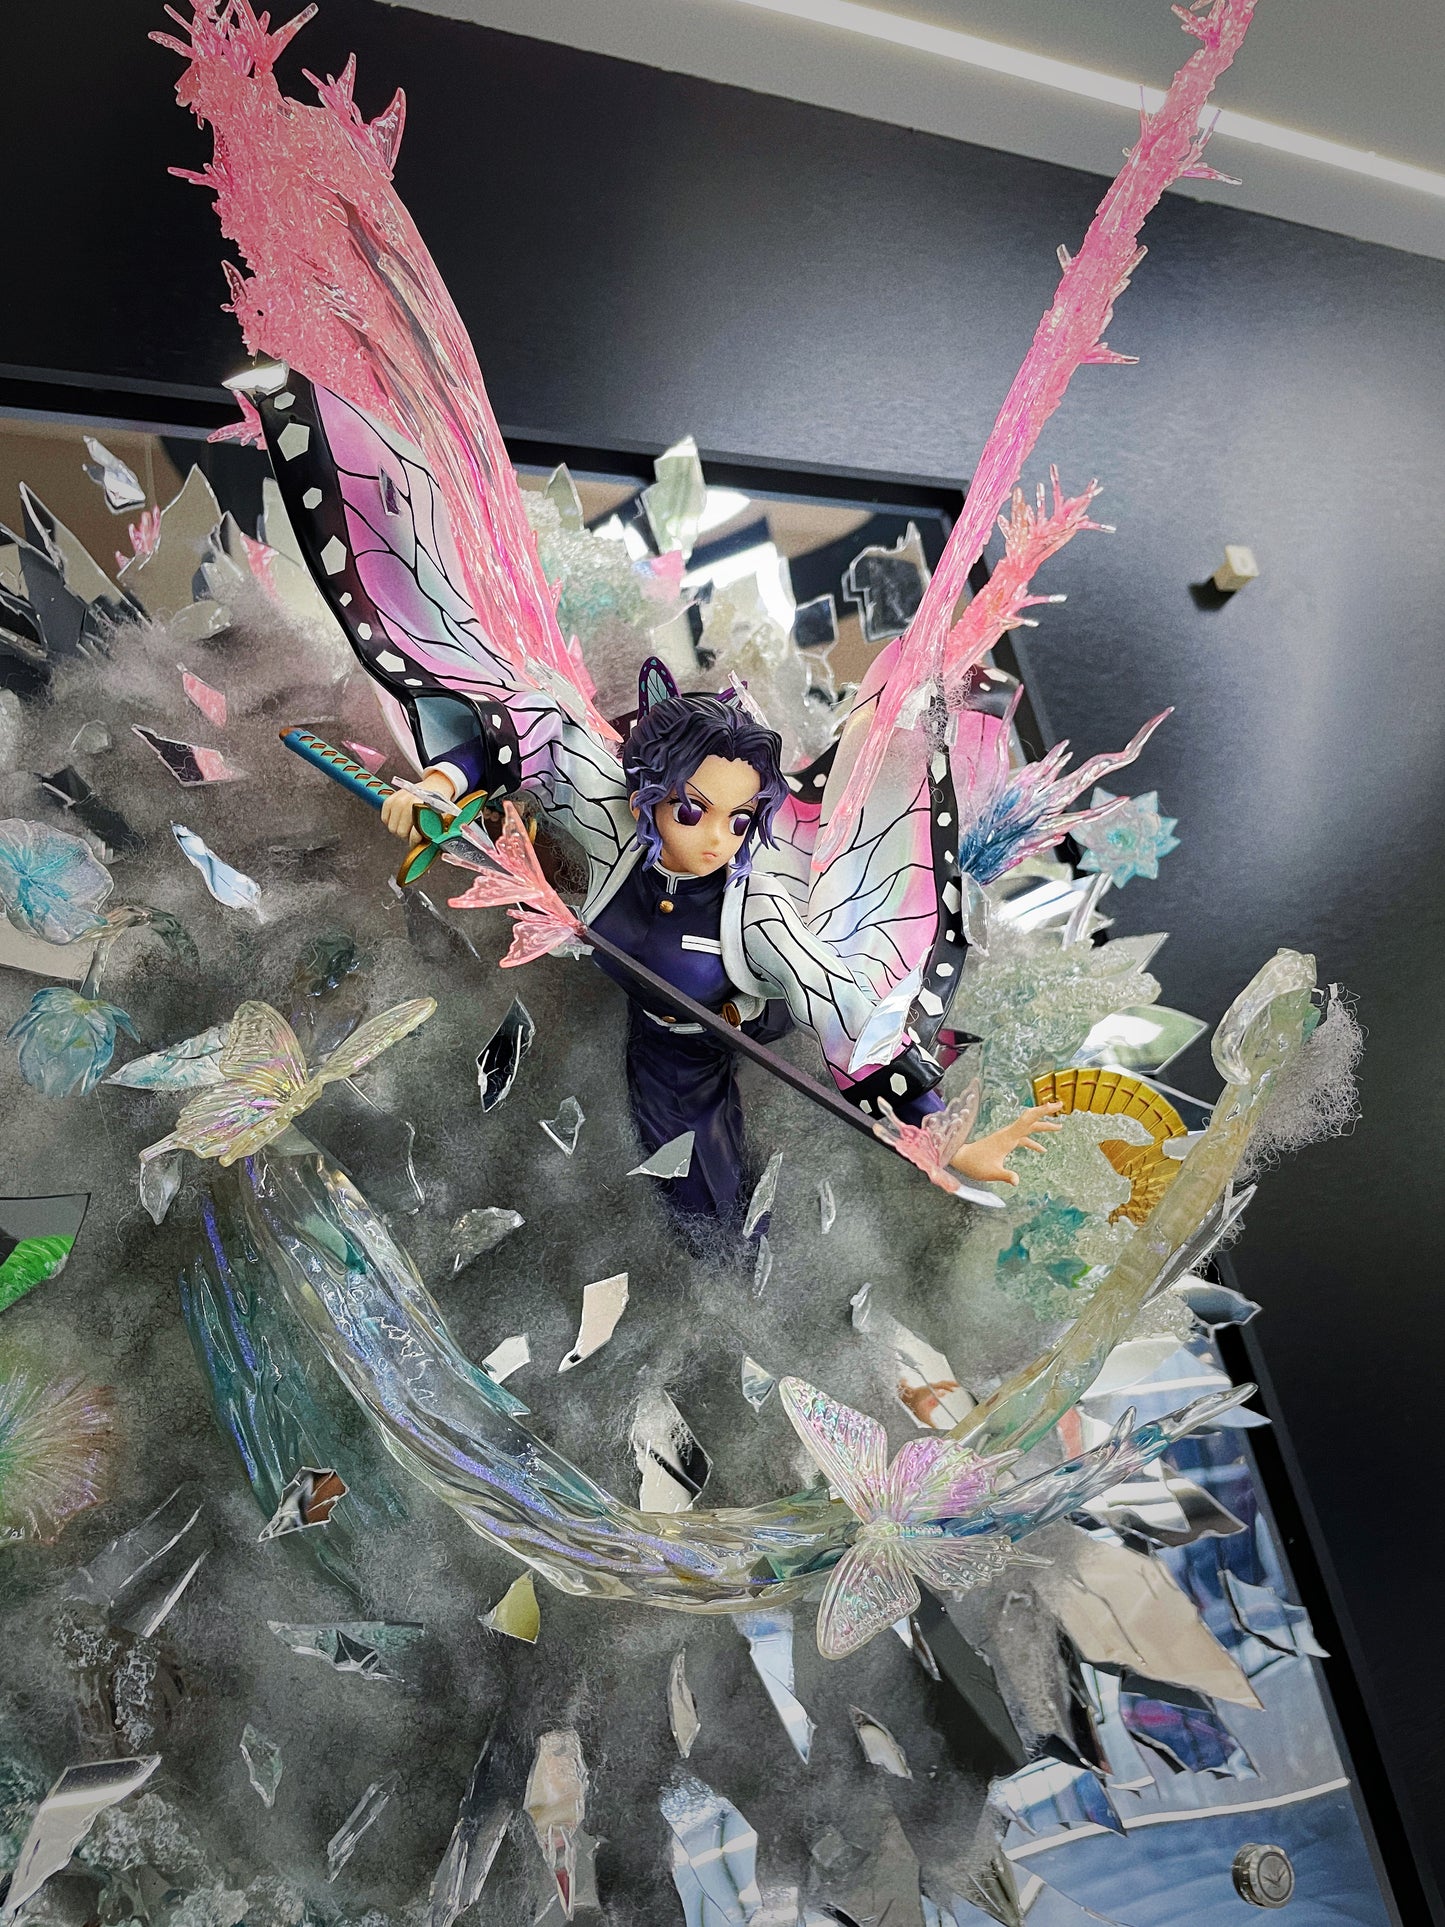 [custom one]Shinobu kocho fly from broken mirror